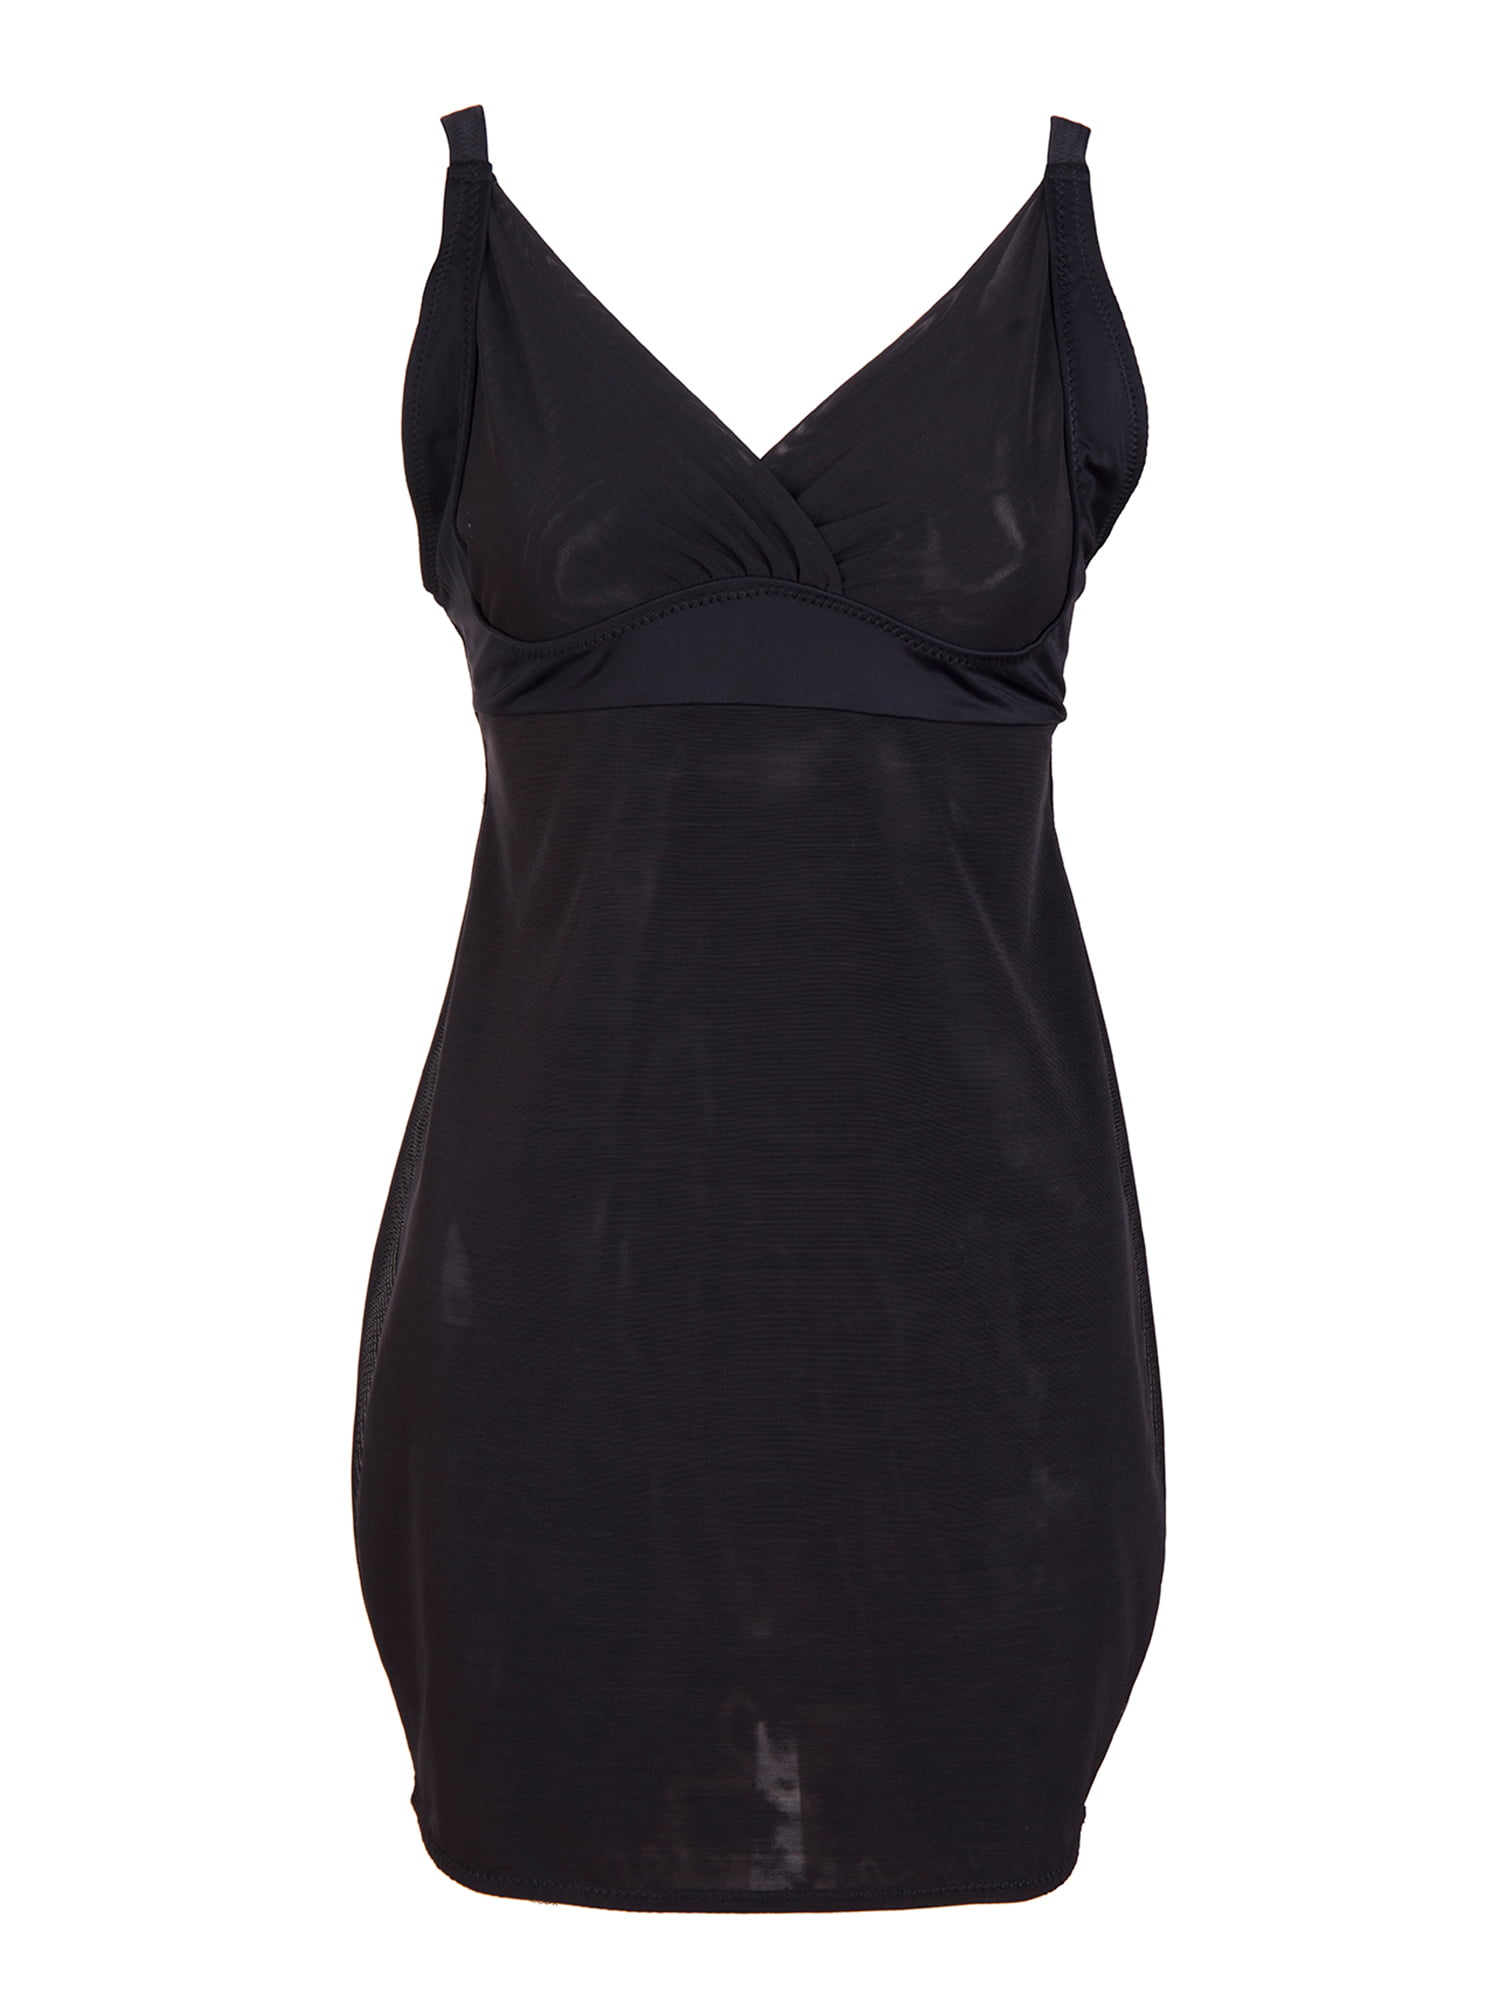 2XL, Black Womens Full Body Shaper Body Wrap Shapewear Skirt Seamless Stretch Base Tube Top Body Tight Skirt 